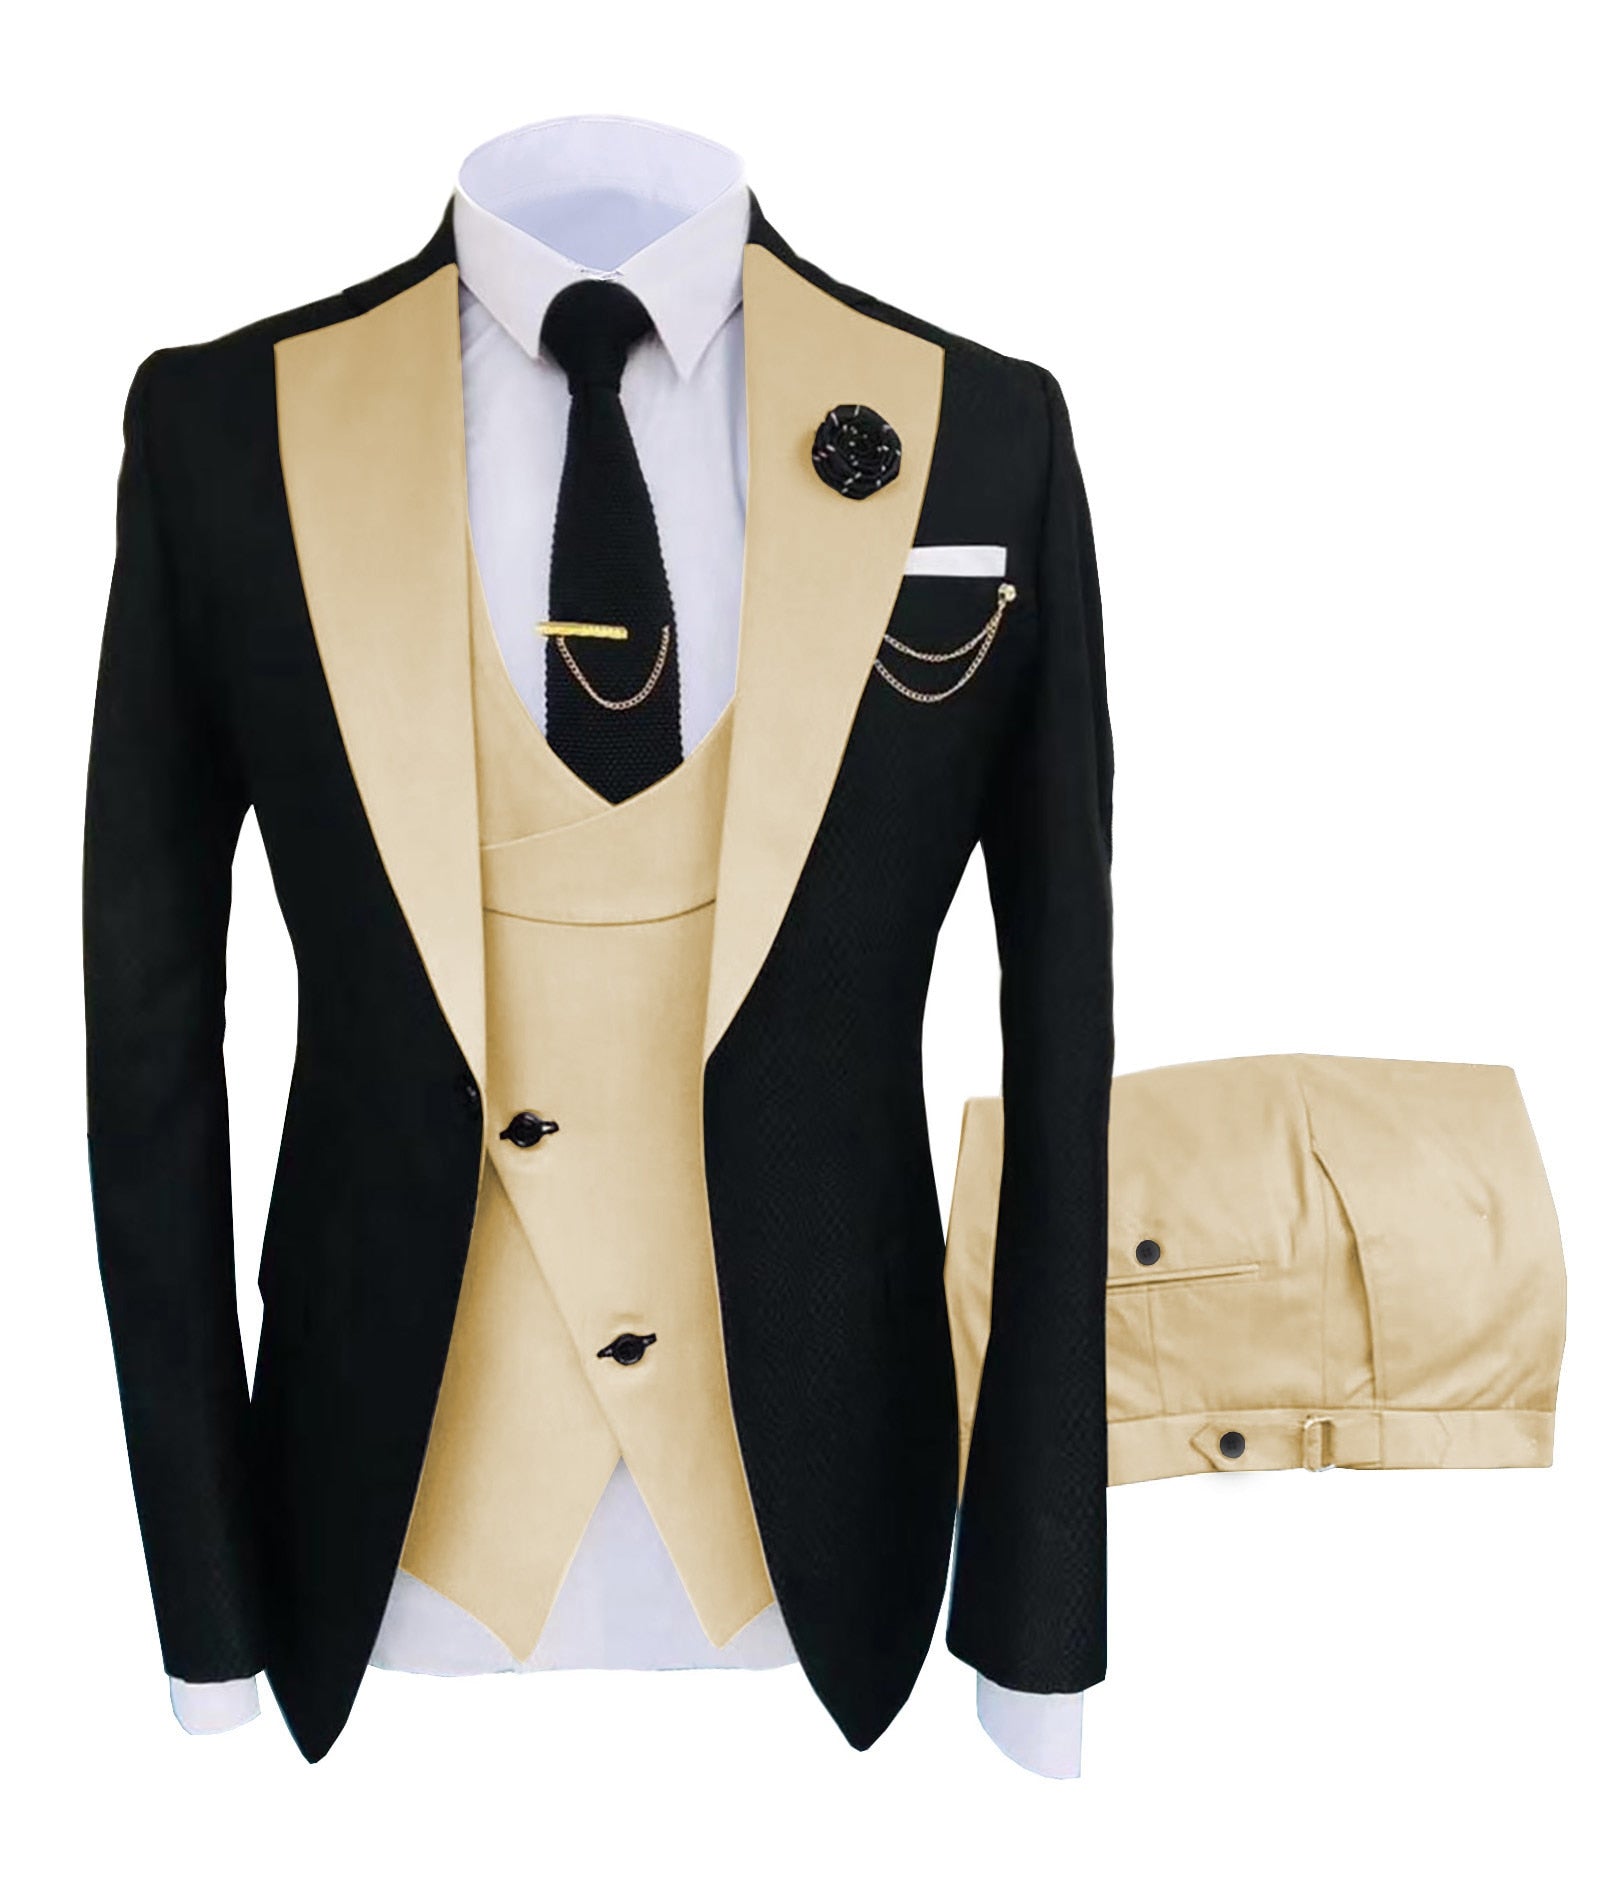 KENTON SUITS Men's Fashion Formal 3 Piece Tuxedo (Jacket + Pants +